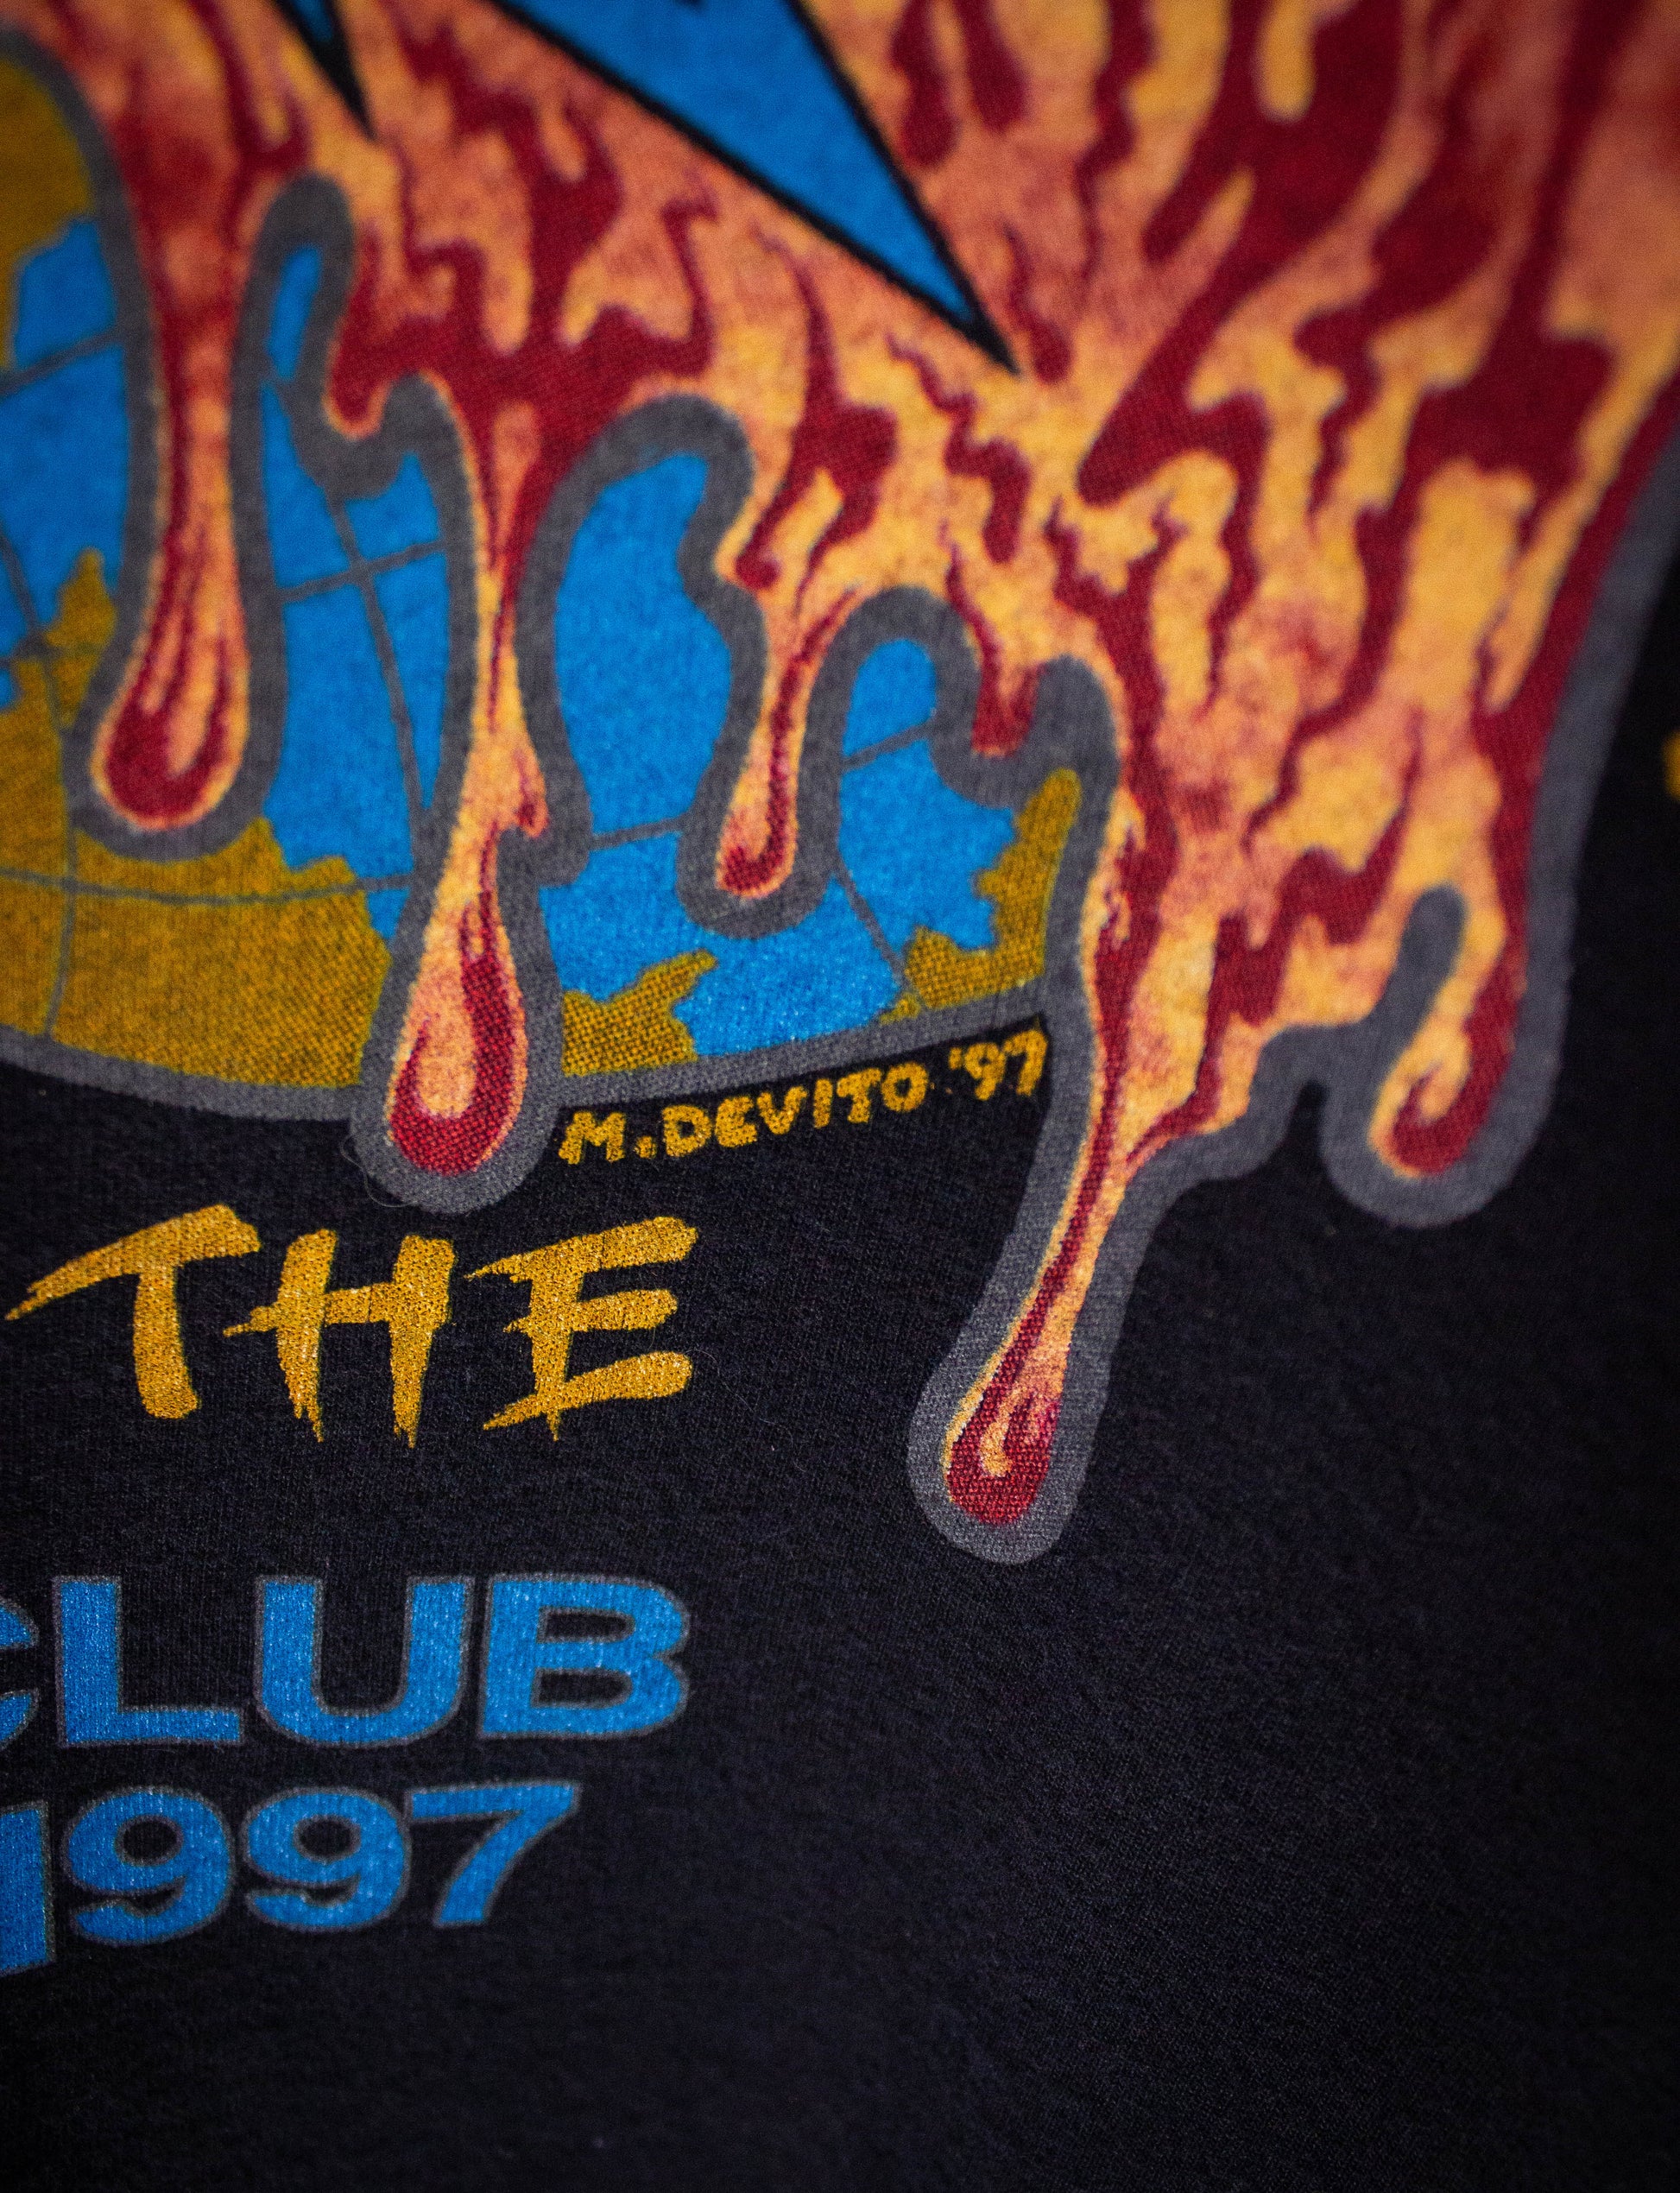 Vintage Metallica Fan Club Concert T-Shirt 1997 XXL